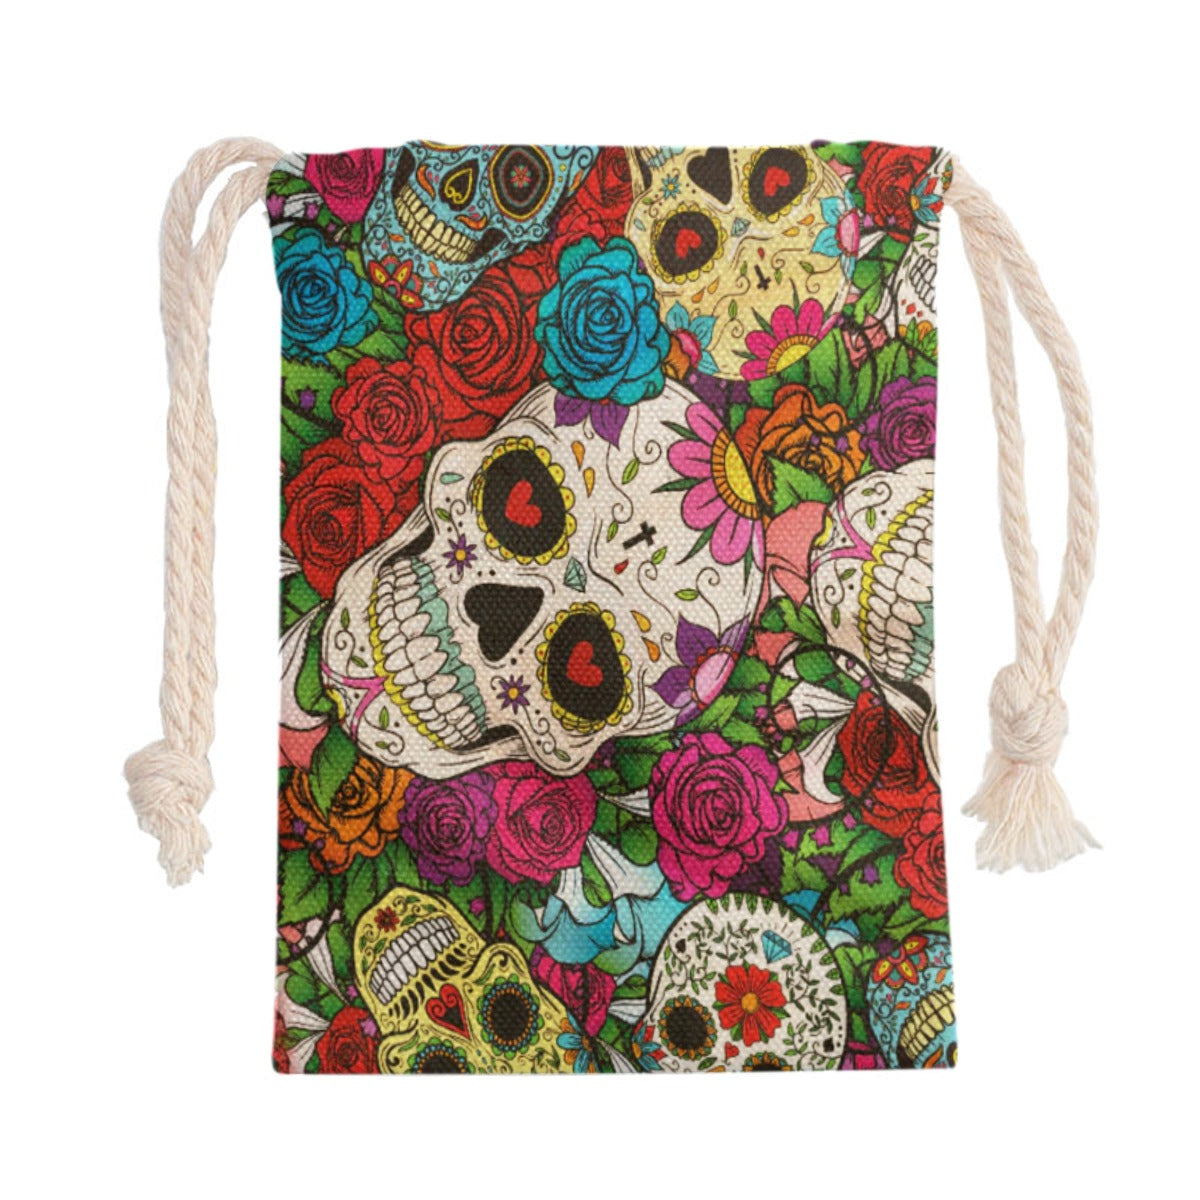 Sugar skull gothic Drawstring Bag, Dia de los muertos calaveras mexican skull backpack handbag